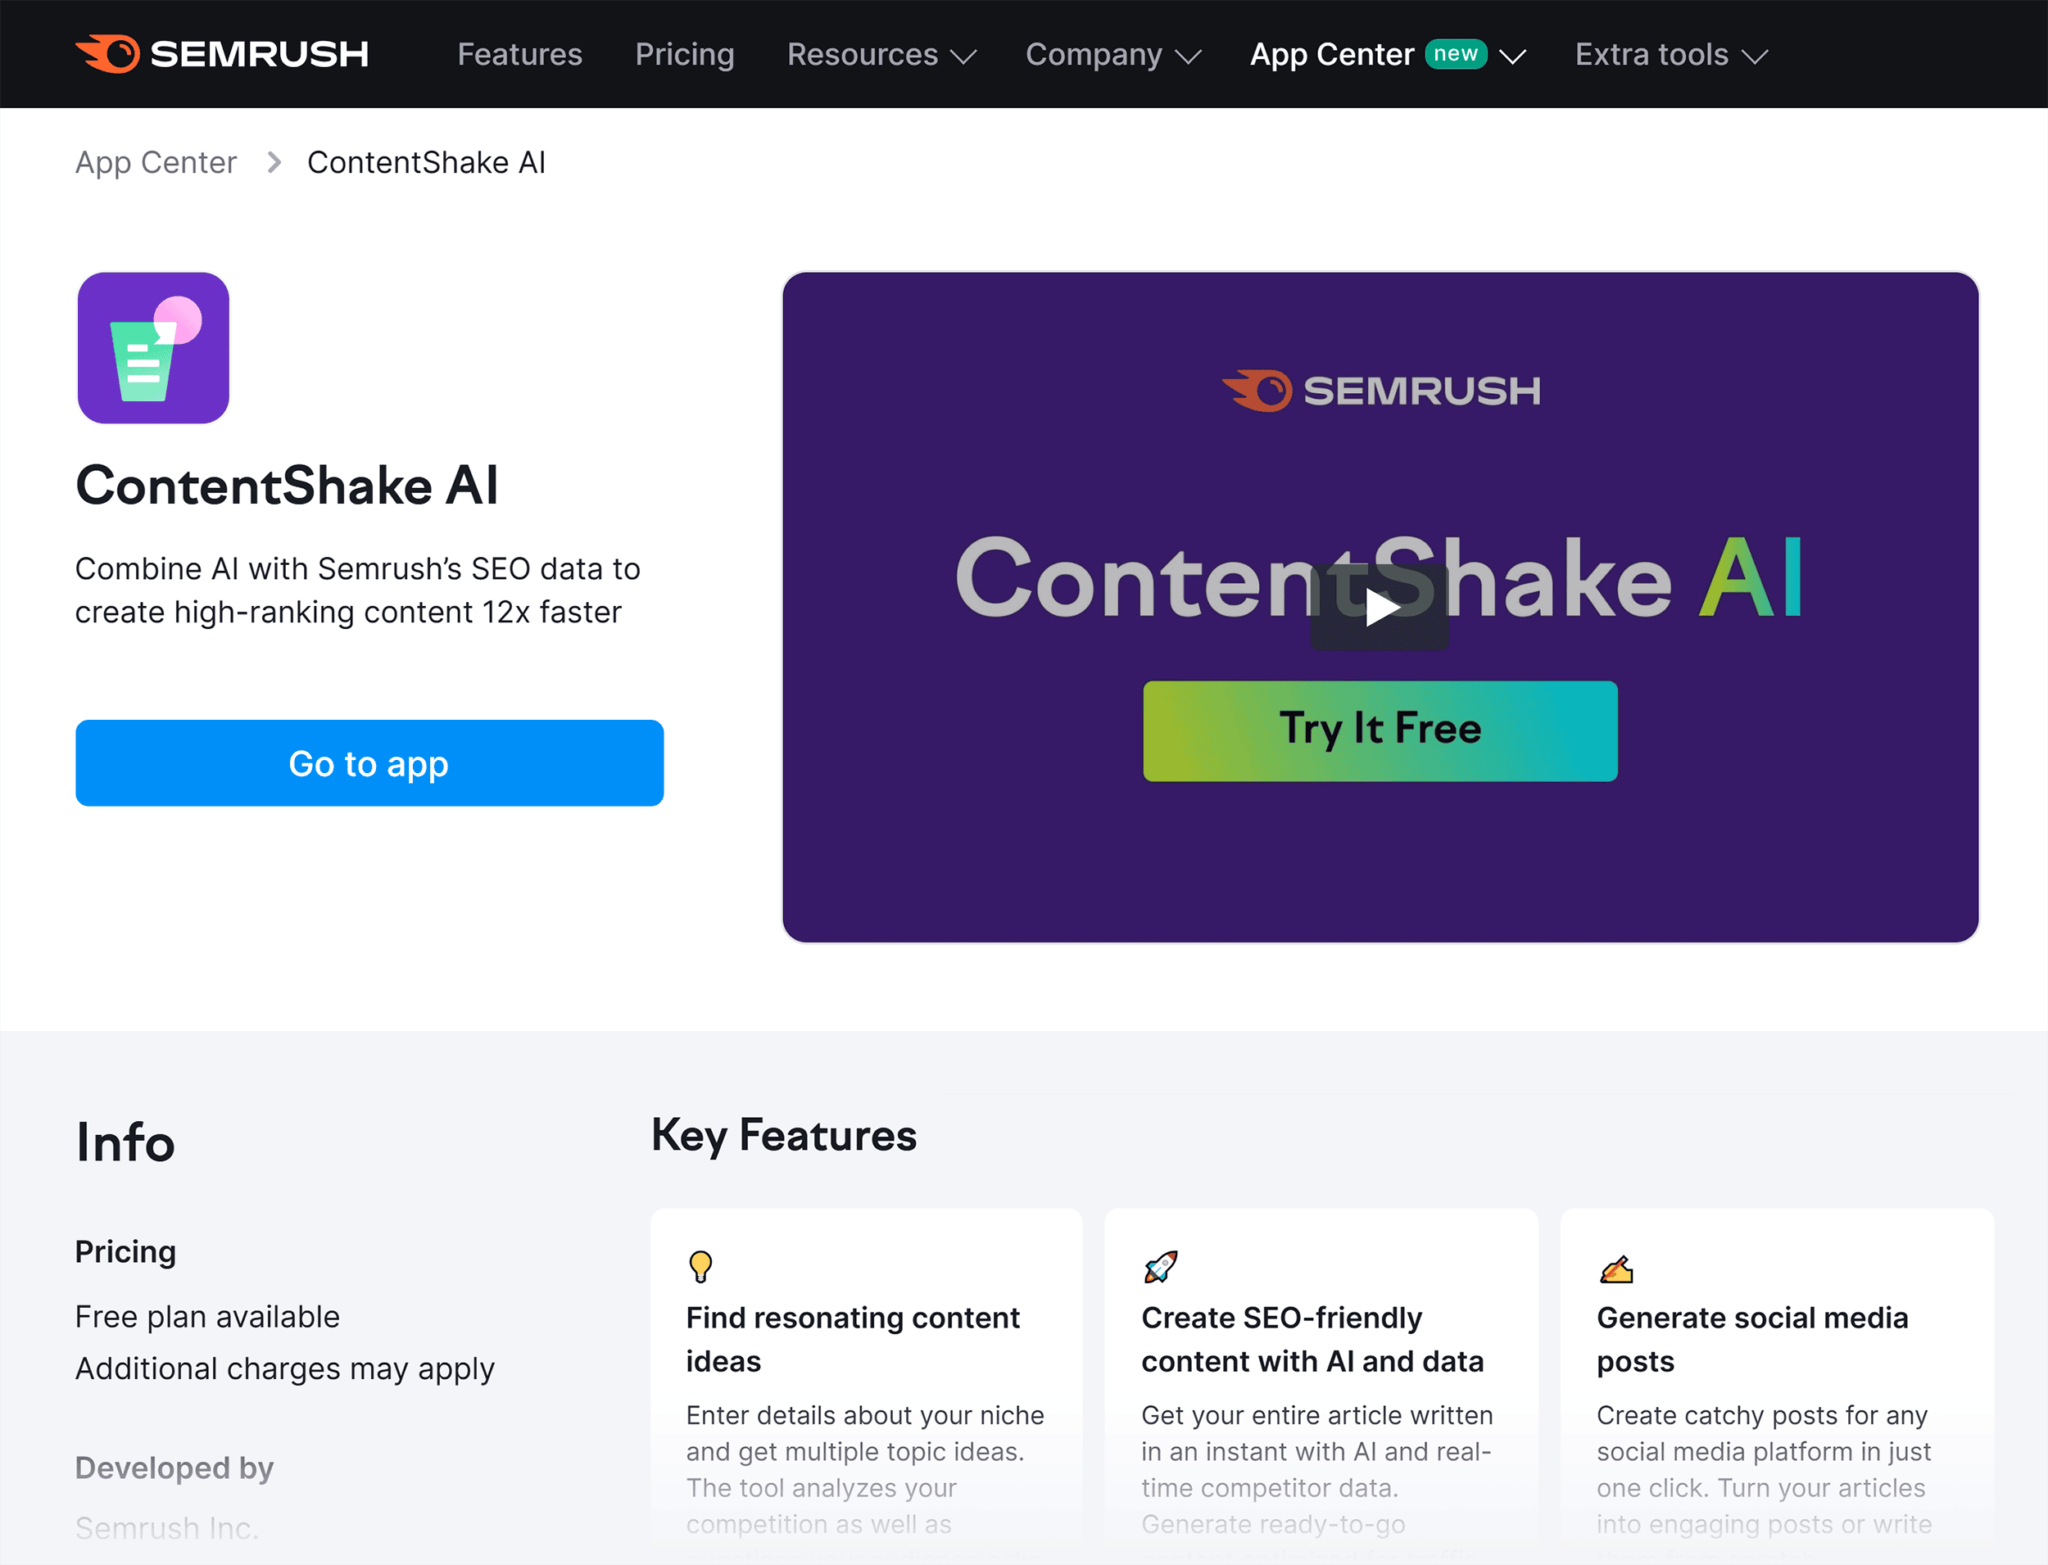 semrush-contentshake-1 29 Top Digital Marketing Tools for Every Budget